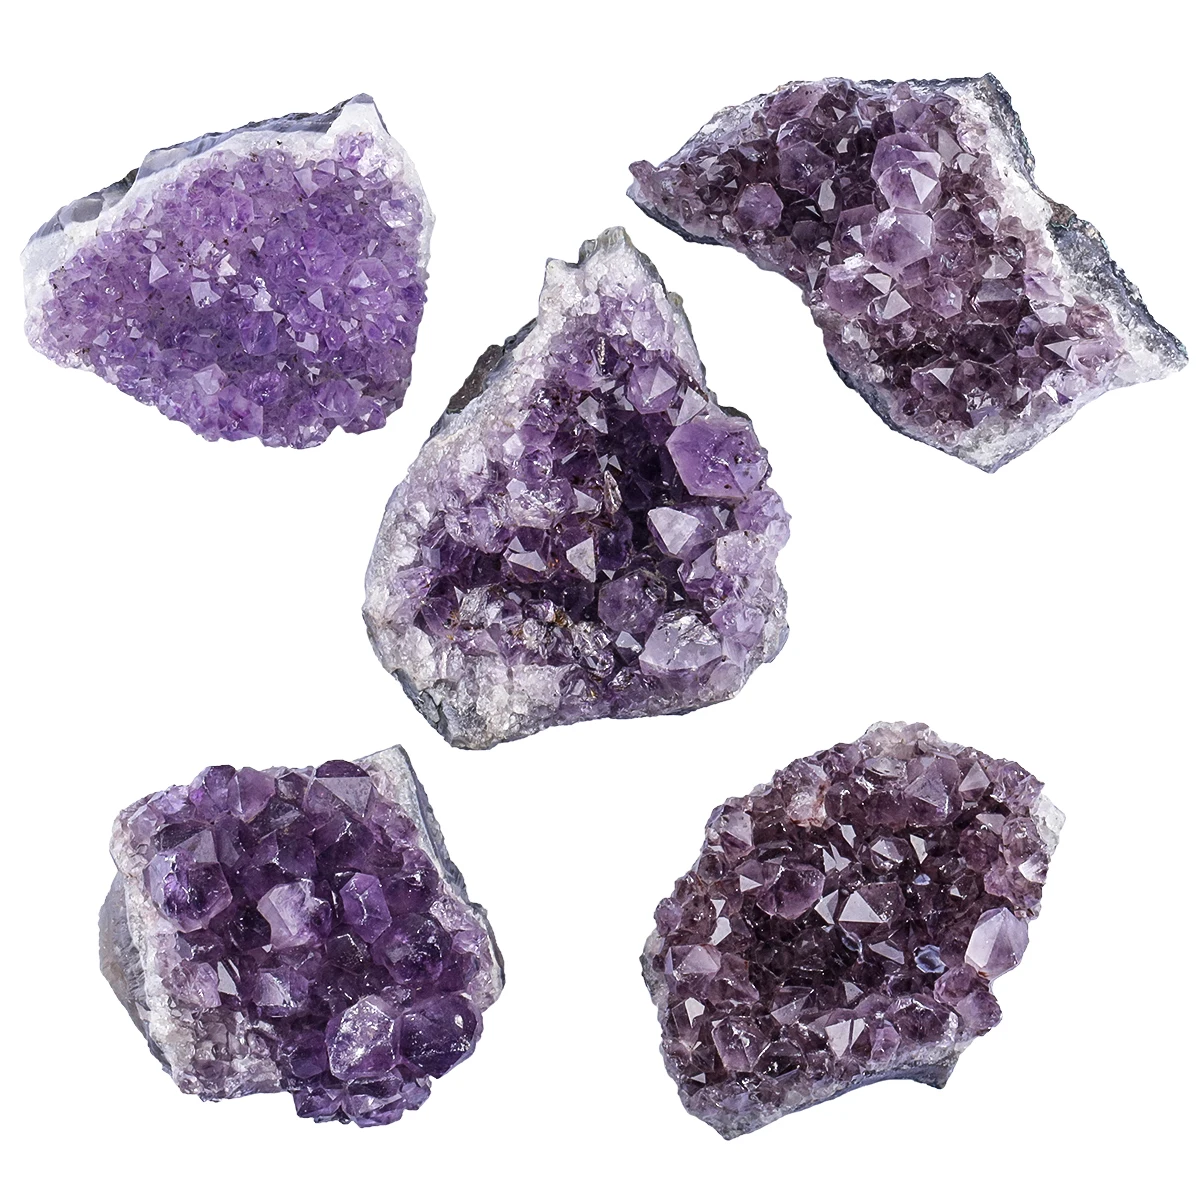 400g Natural Amethyst Cluster Healing Rough Gemstone Mineral Specimen Chakra Balancing For Home Decoration